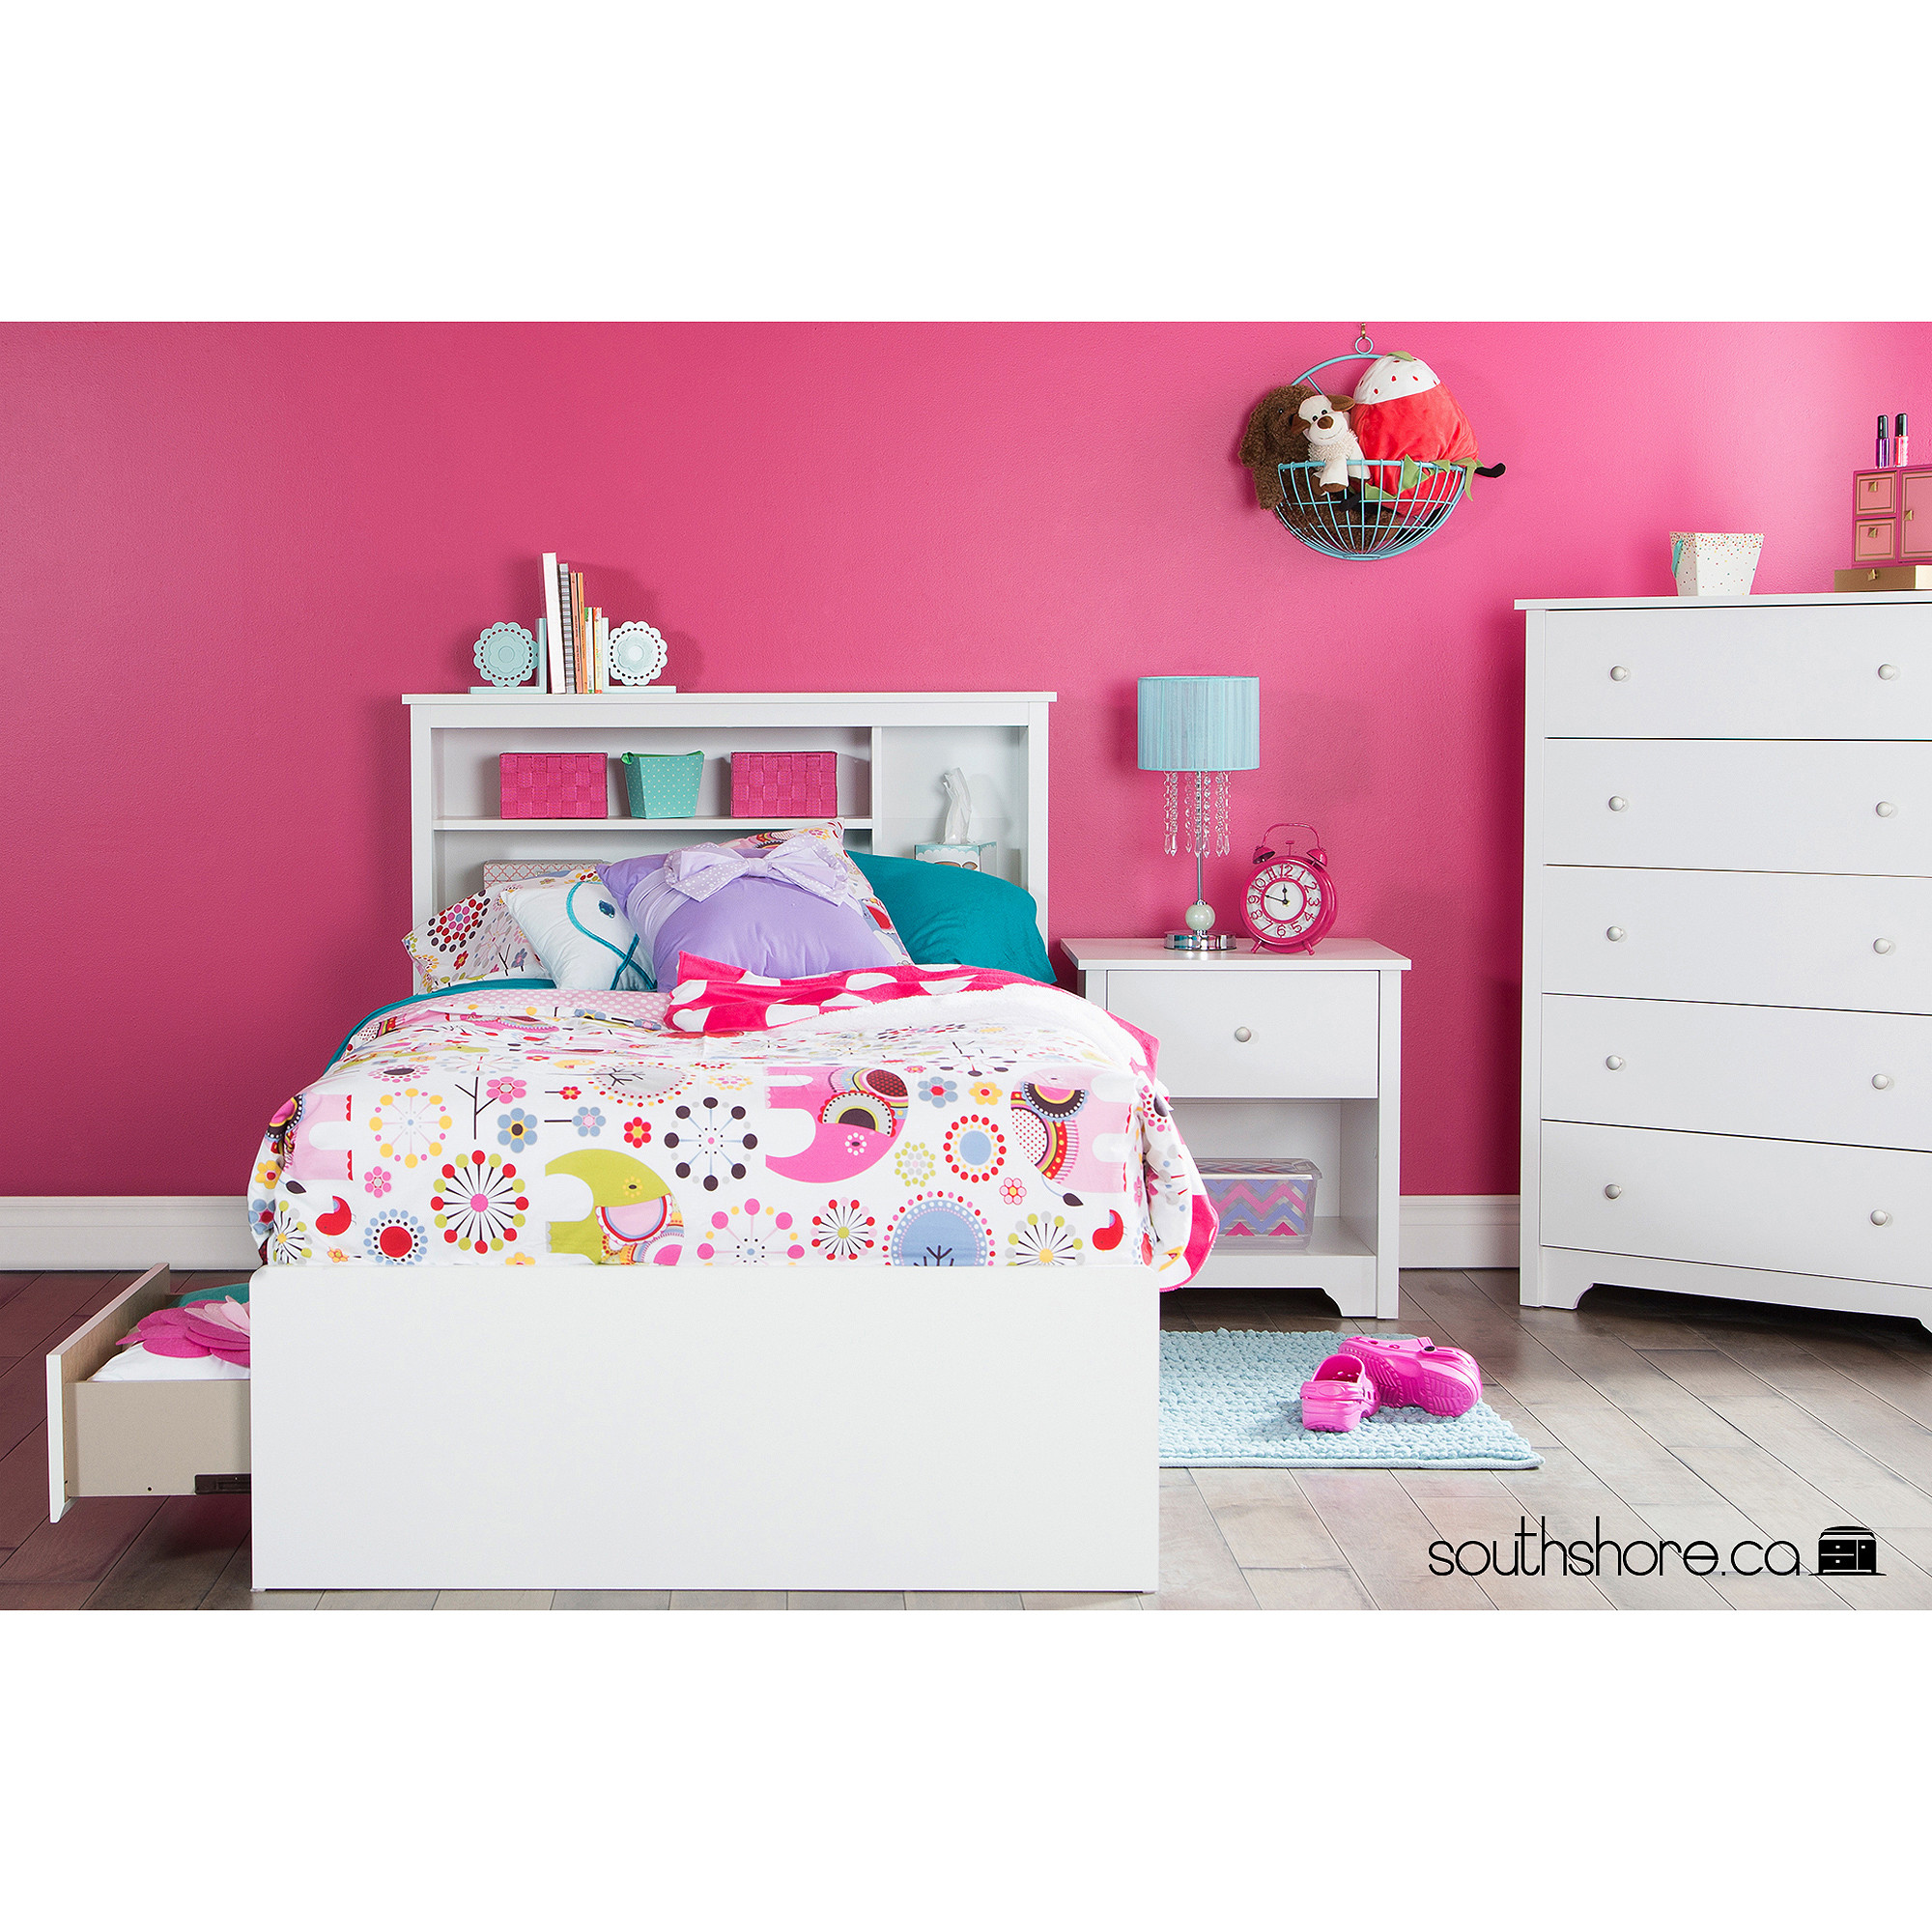 Walmart Kids Bedroom Sets
 South Shore Vito Baby and Kids Bedroom Furniture